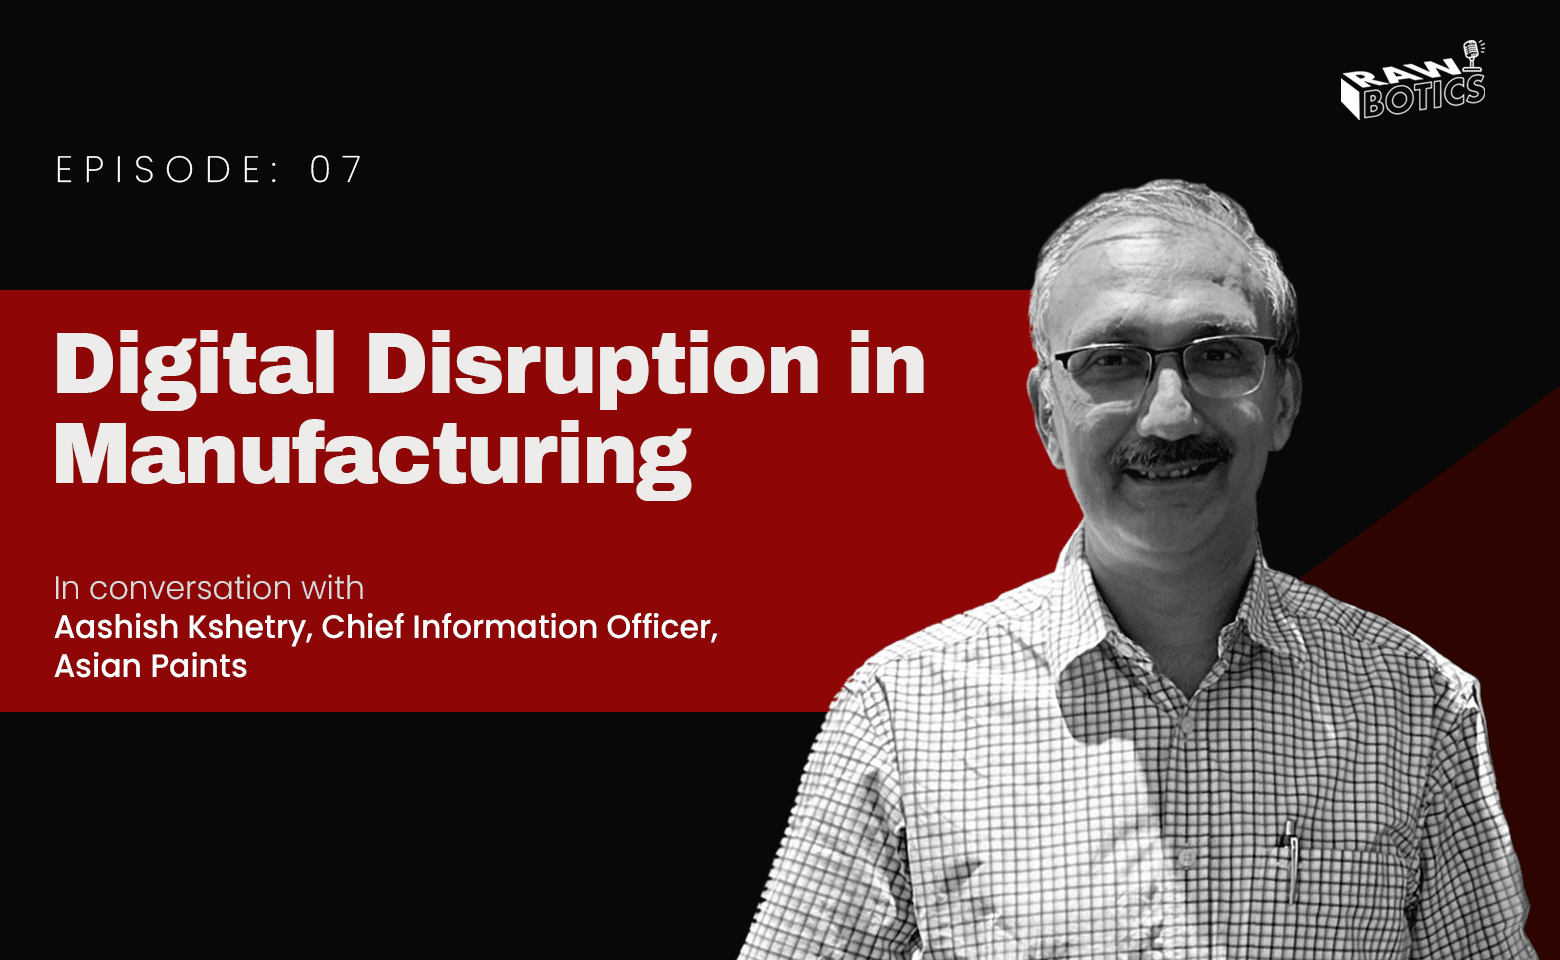 Digital Disruption in Manufacturing